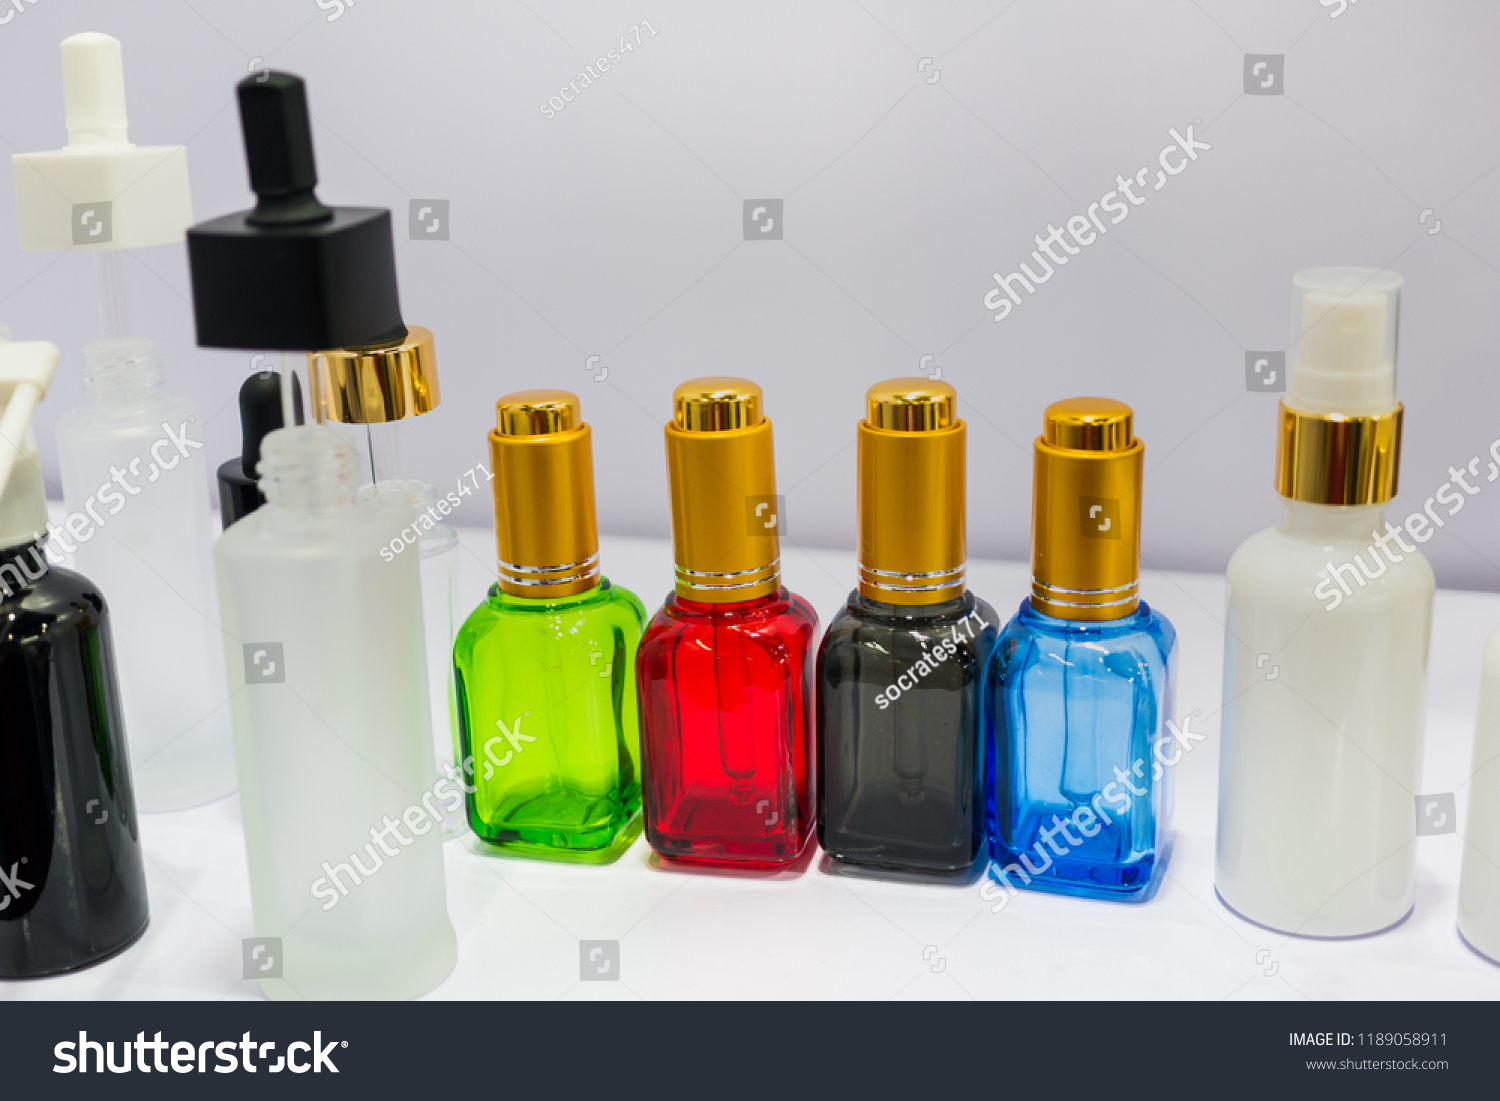 Bottle spray, lotion bottle, perfume bottle,packaging for beauty #1189058911